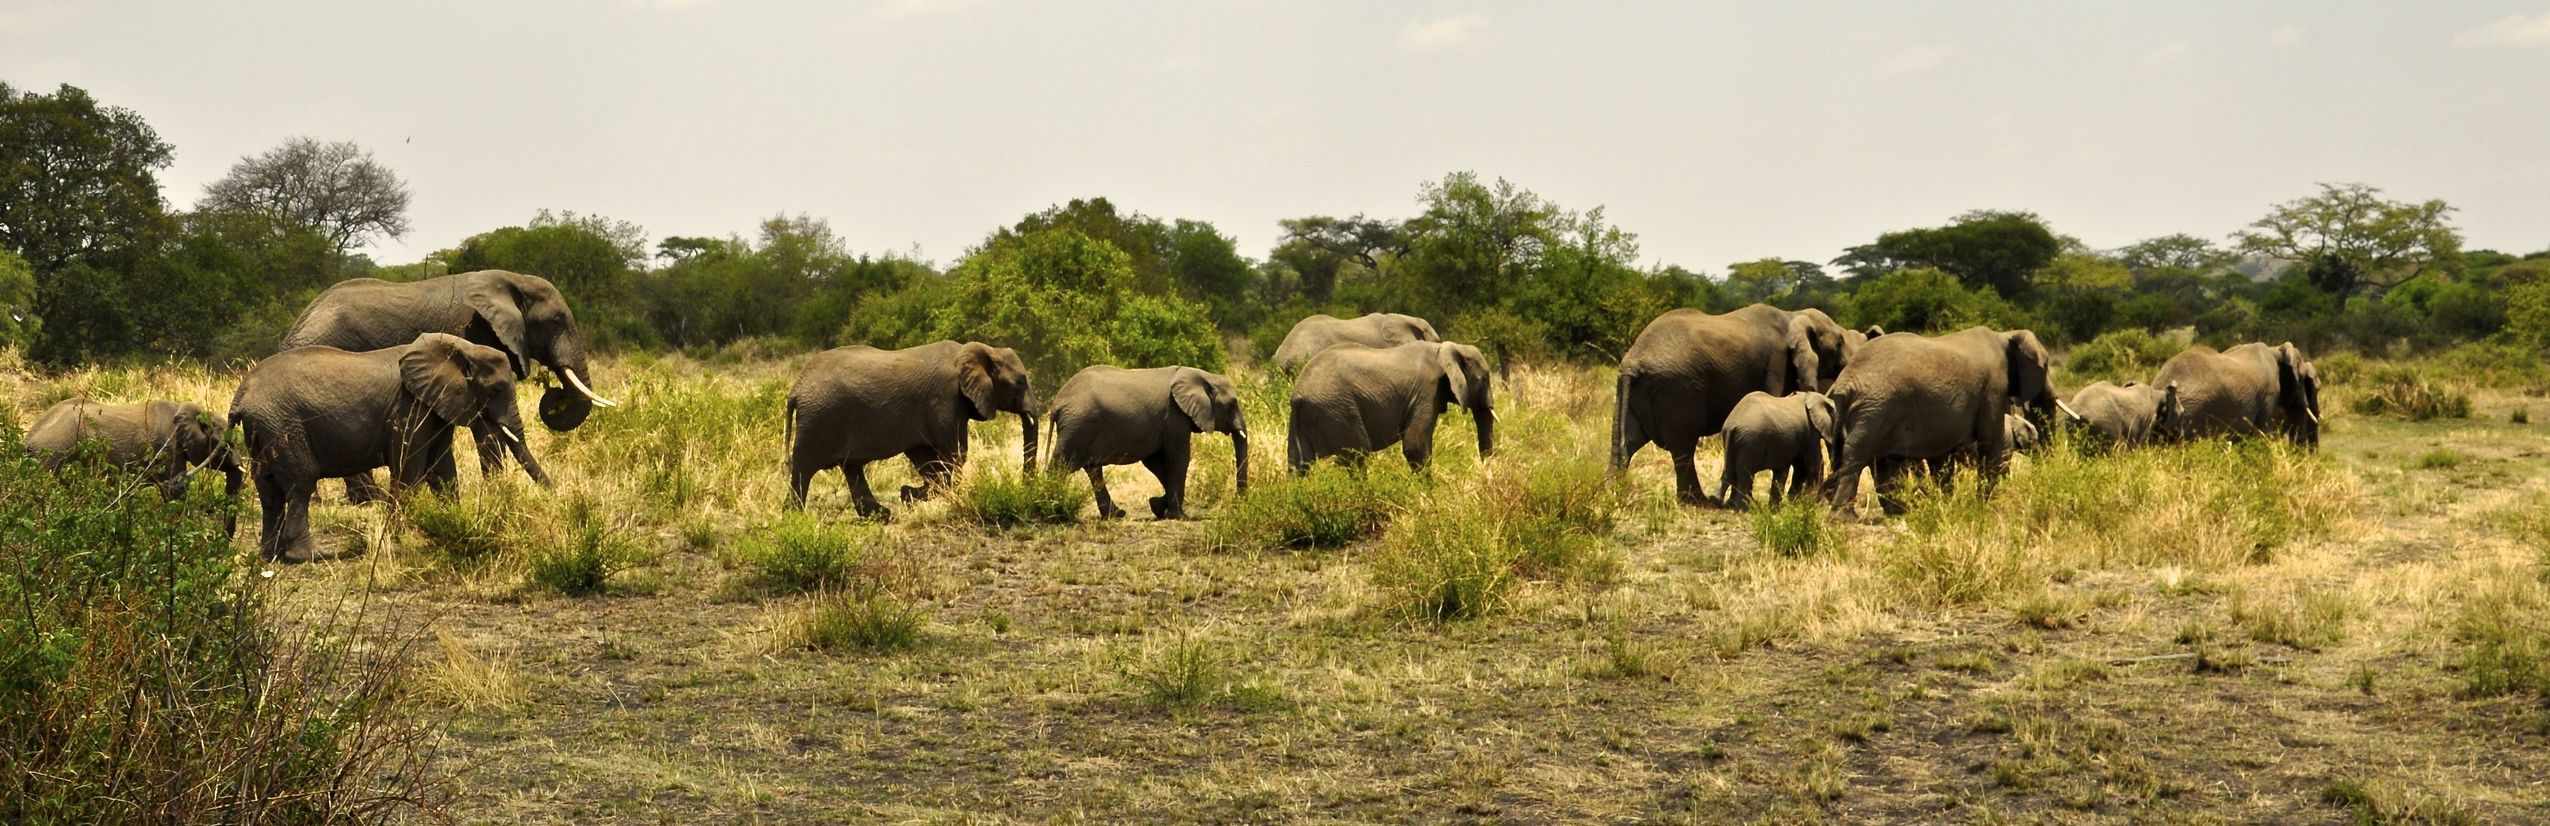 Tansania Familienreise - Elefanten